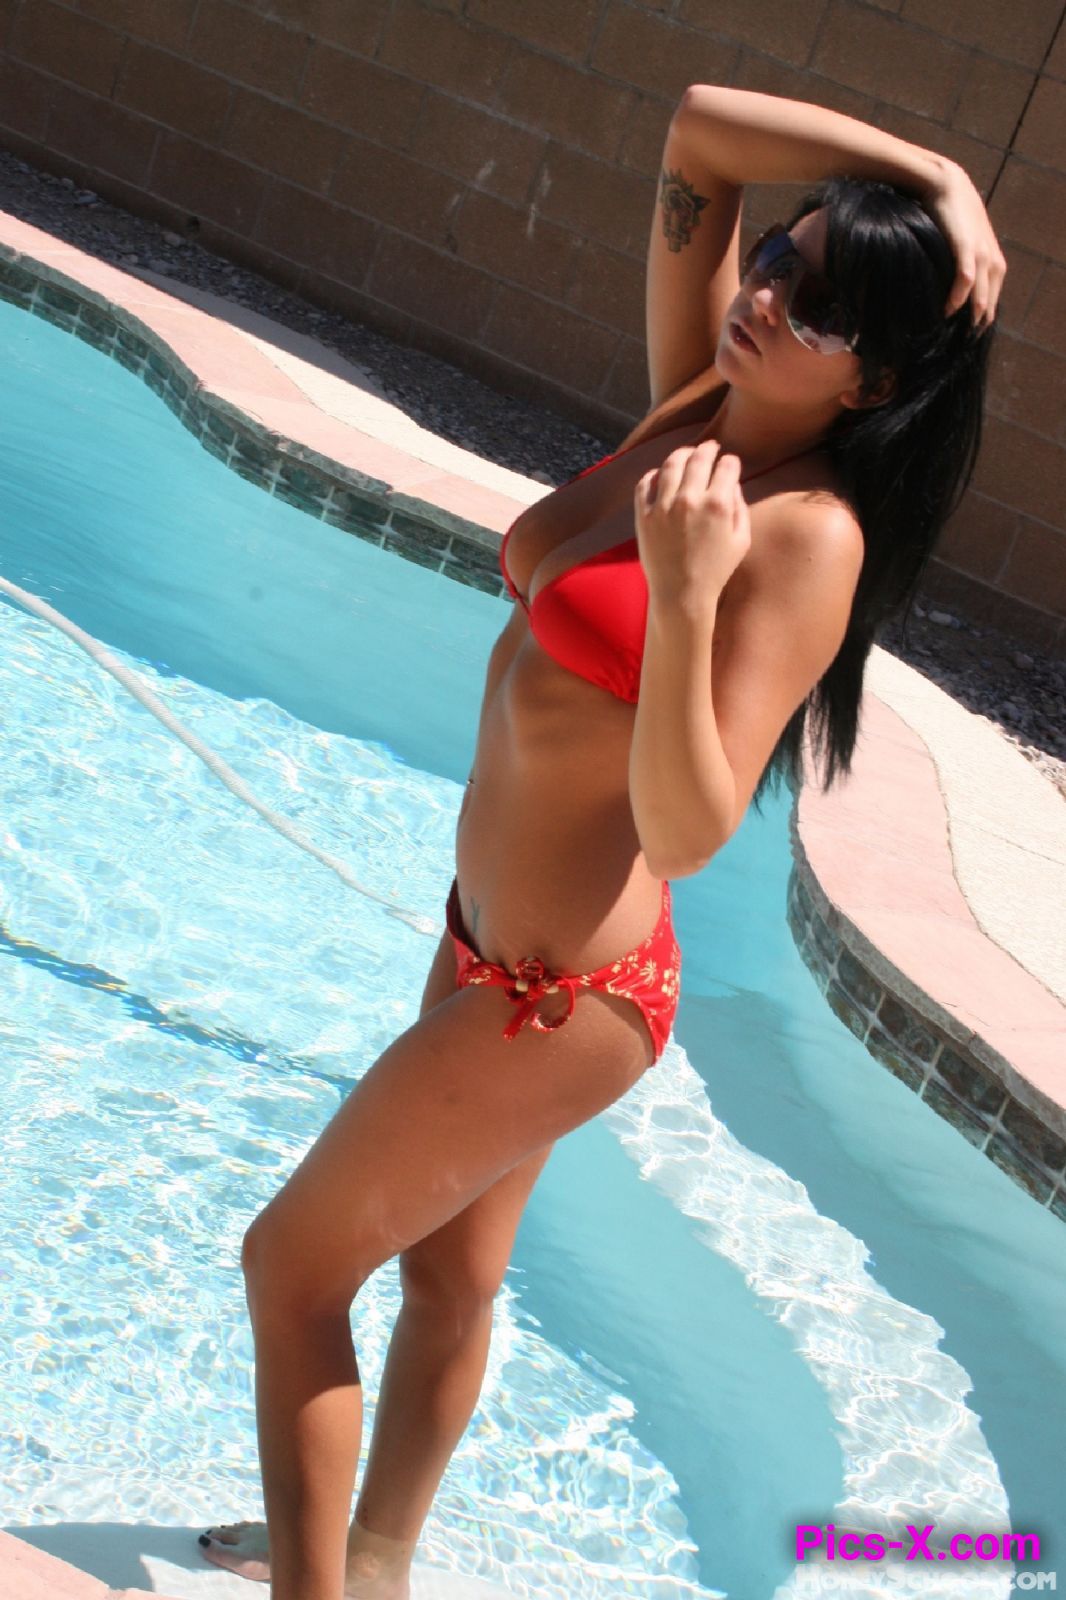 Chloe James In A Bikini - Image 1